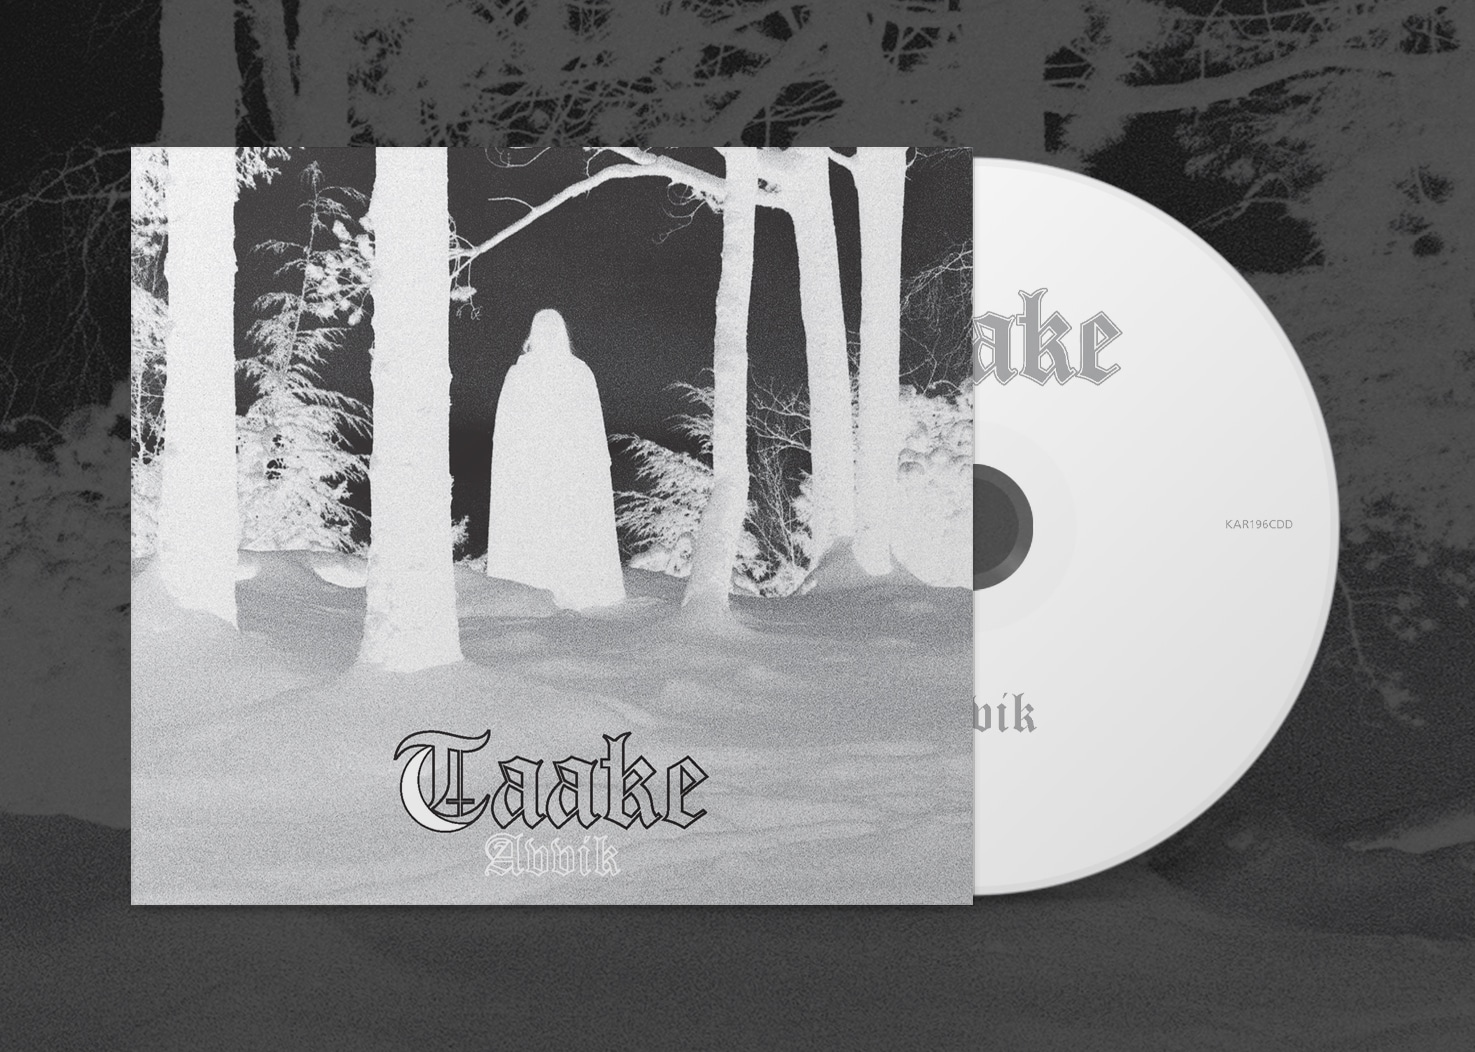 Taake "Avvik" album out now